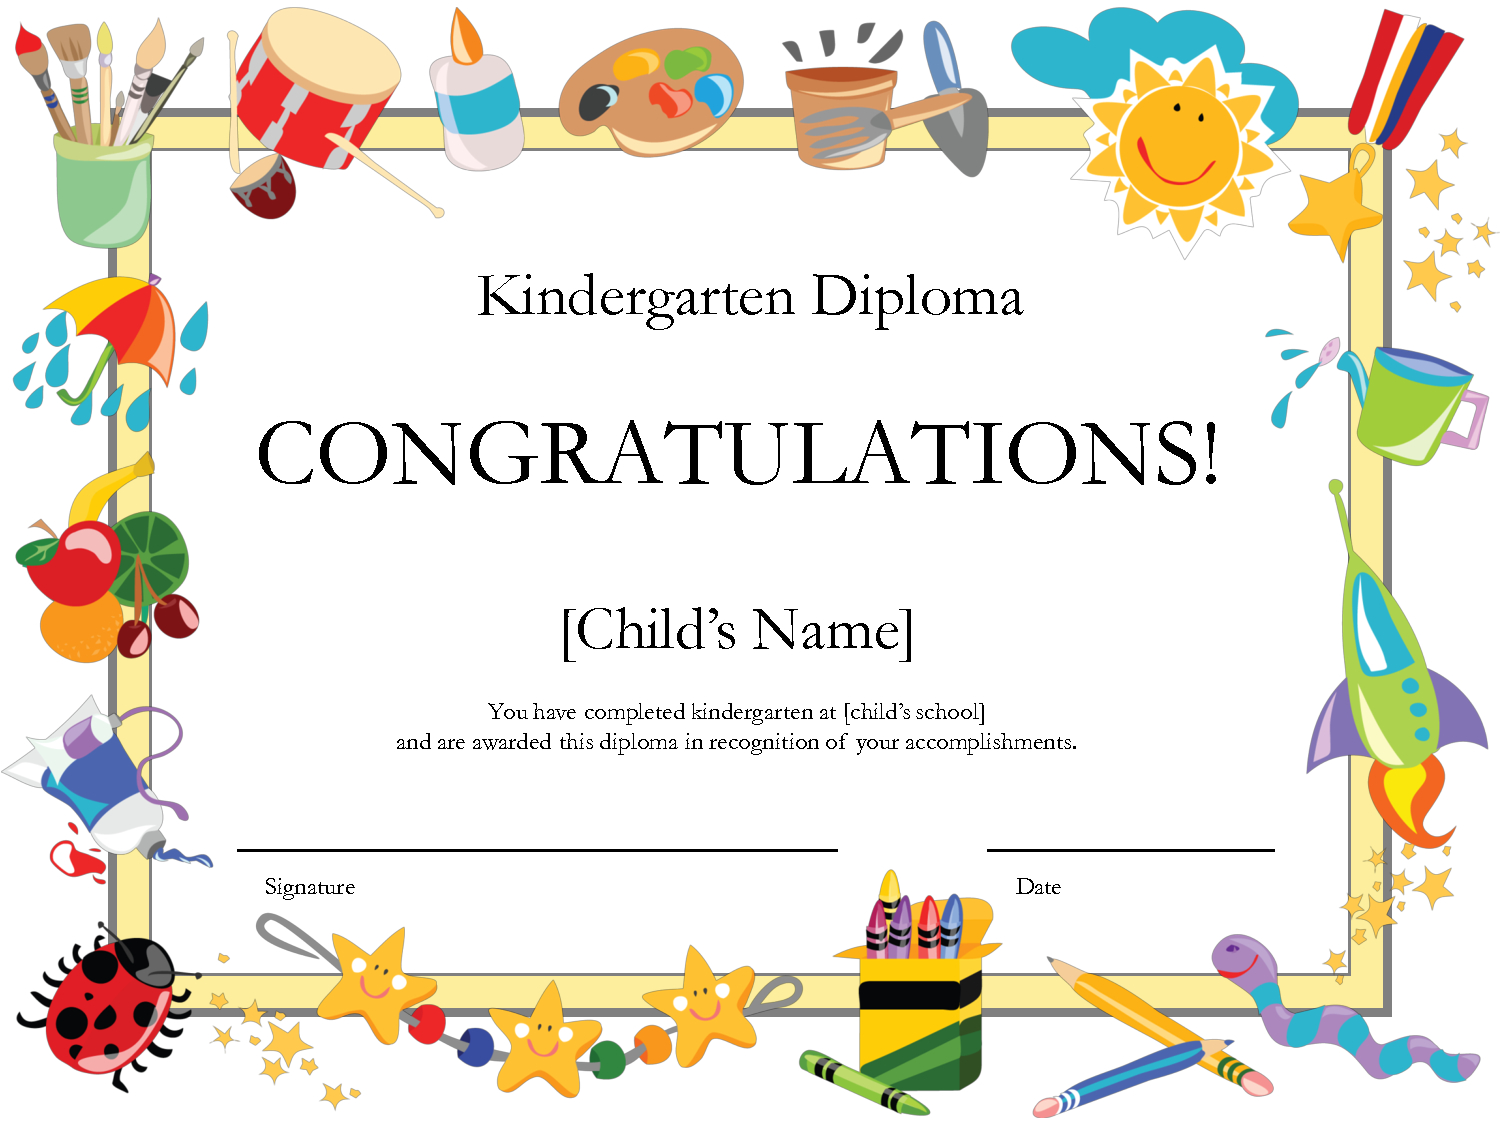 Free Printable Kindergarten Diplomaprintshowergames Intended For Free Printable Graduation Certificate Templates